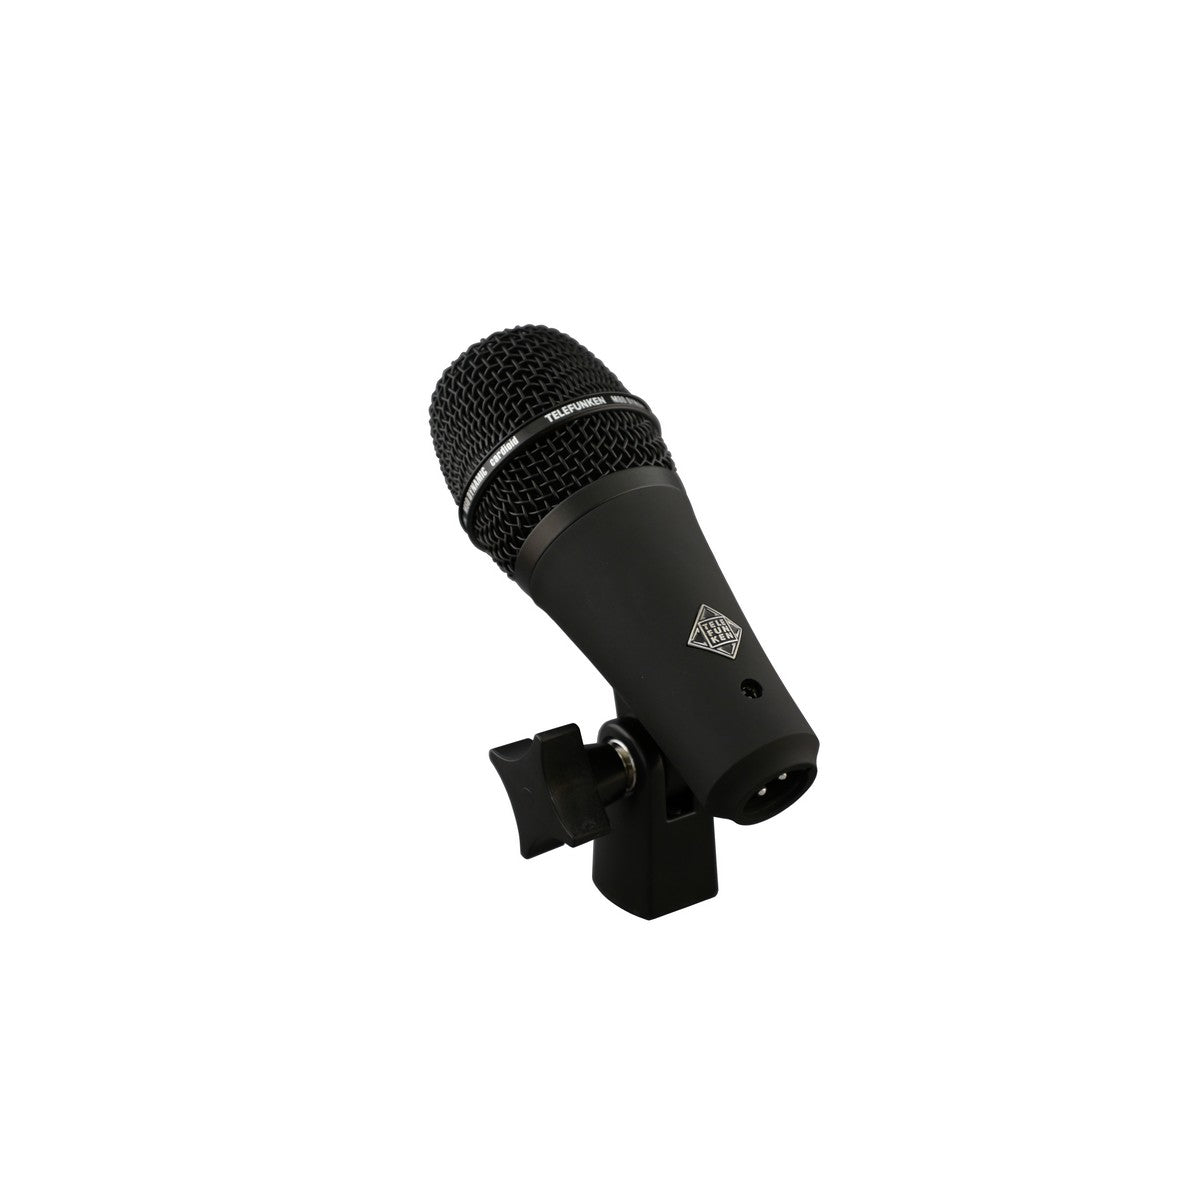 Telefunken M80-SHB Black Low Profile Dynamic Series Cardioid Mic for Snare Drum & Vocals